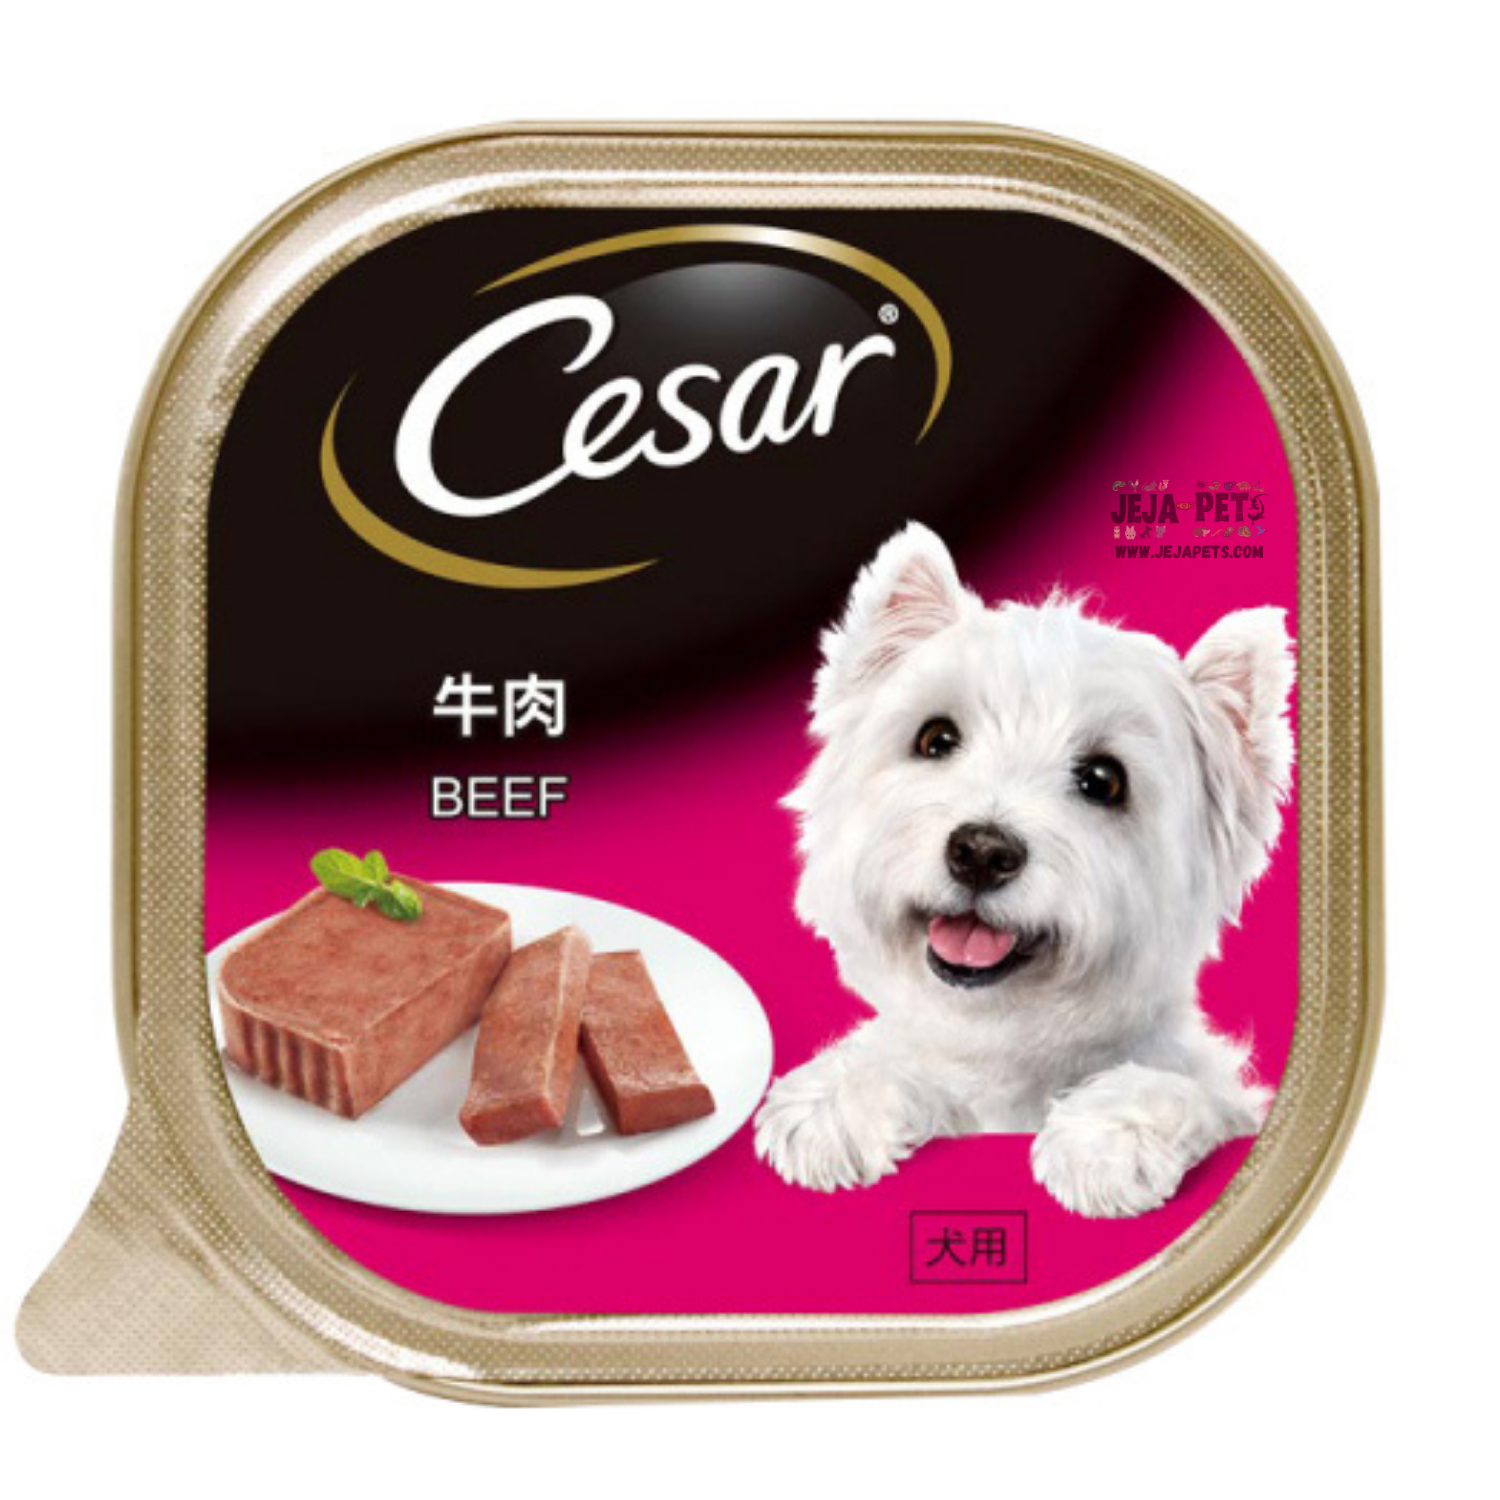 Cesar Beef Wet Dog Food - 100g